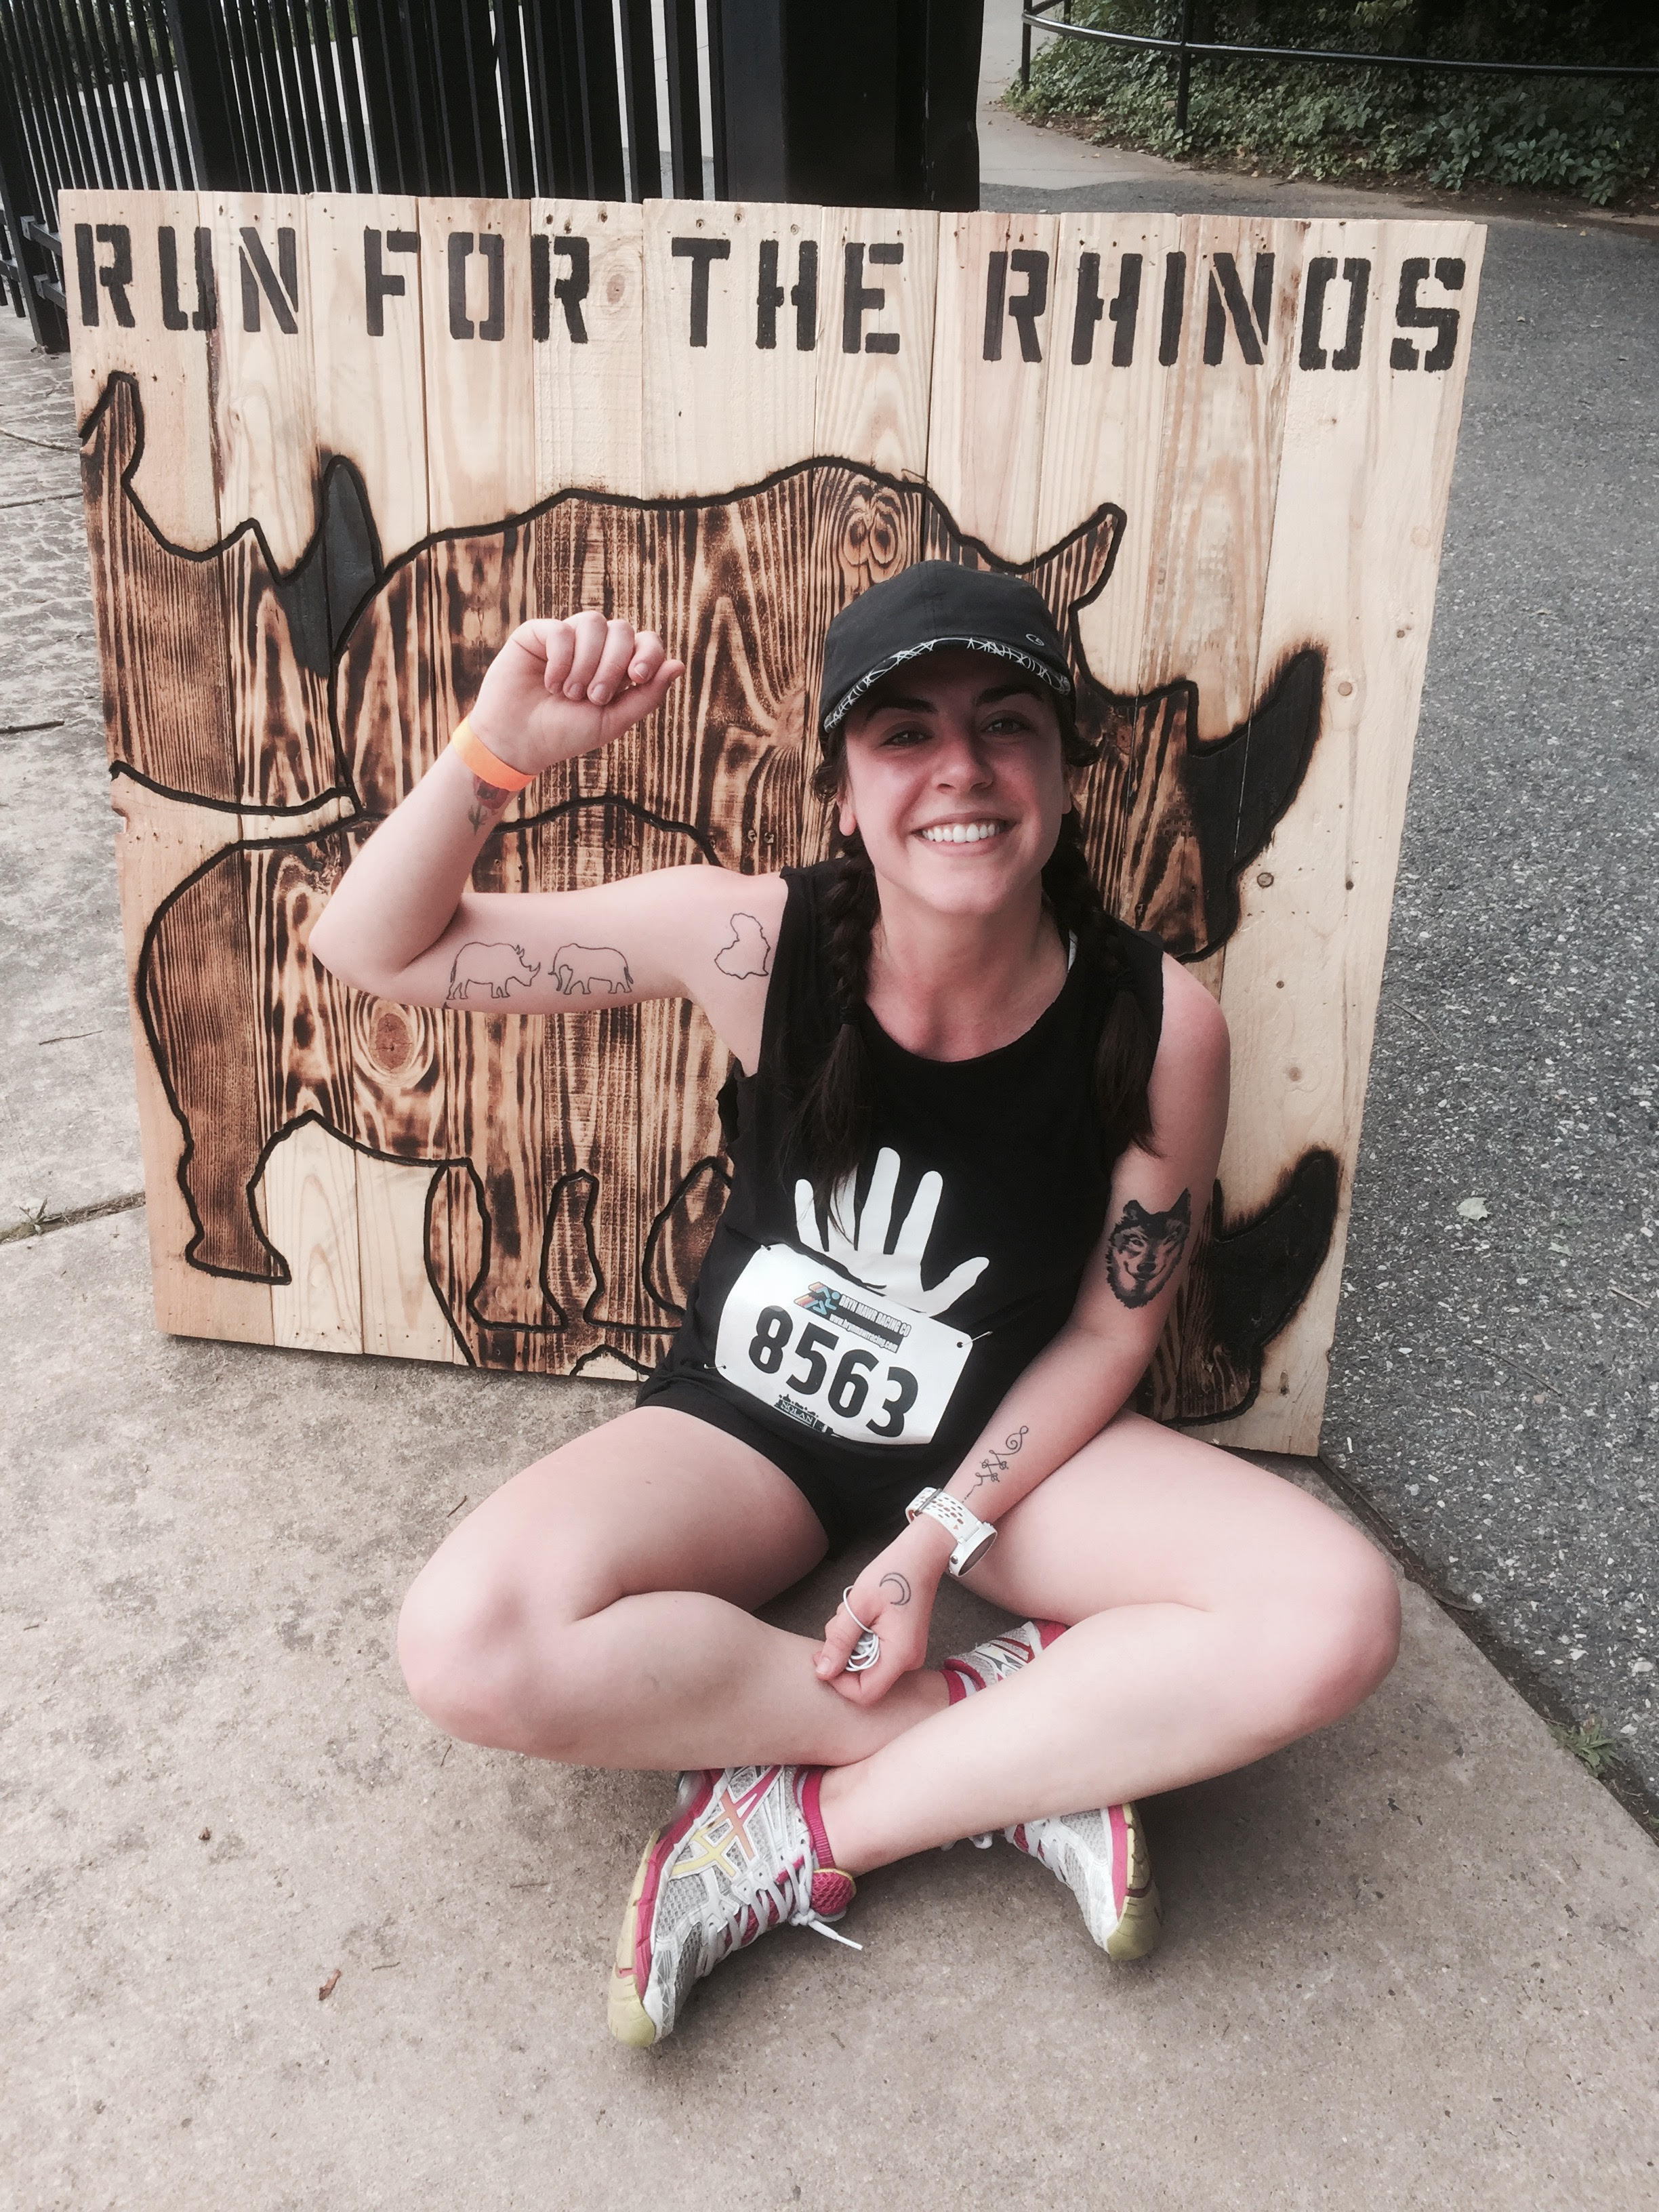 Run for Rhinos!